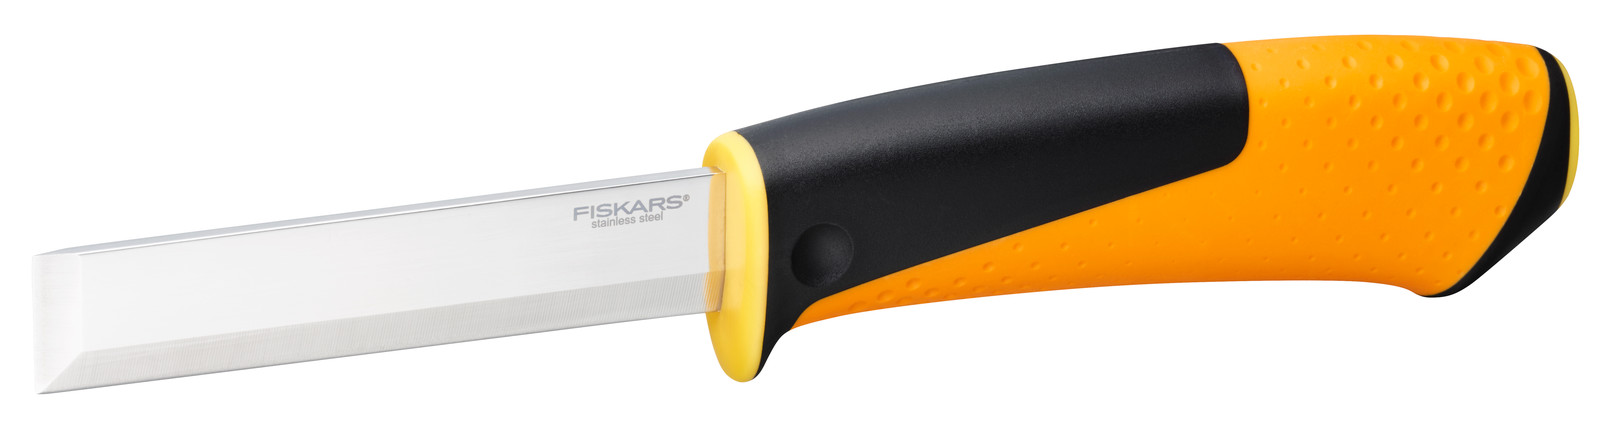 Нож нескладной Fiskars 1023621 цена 0 грн - фотография 2